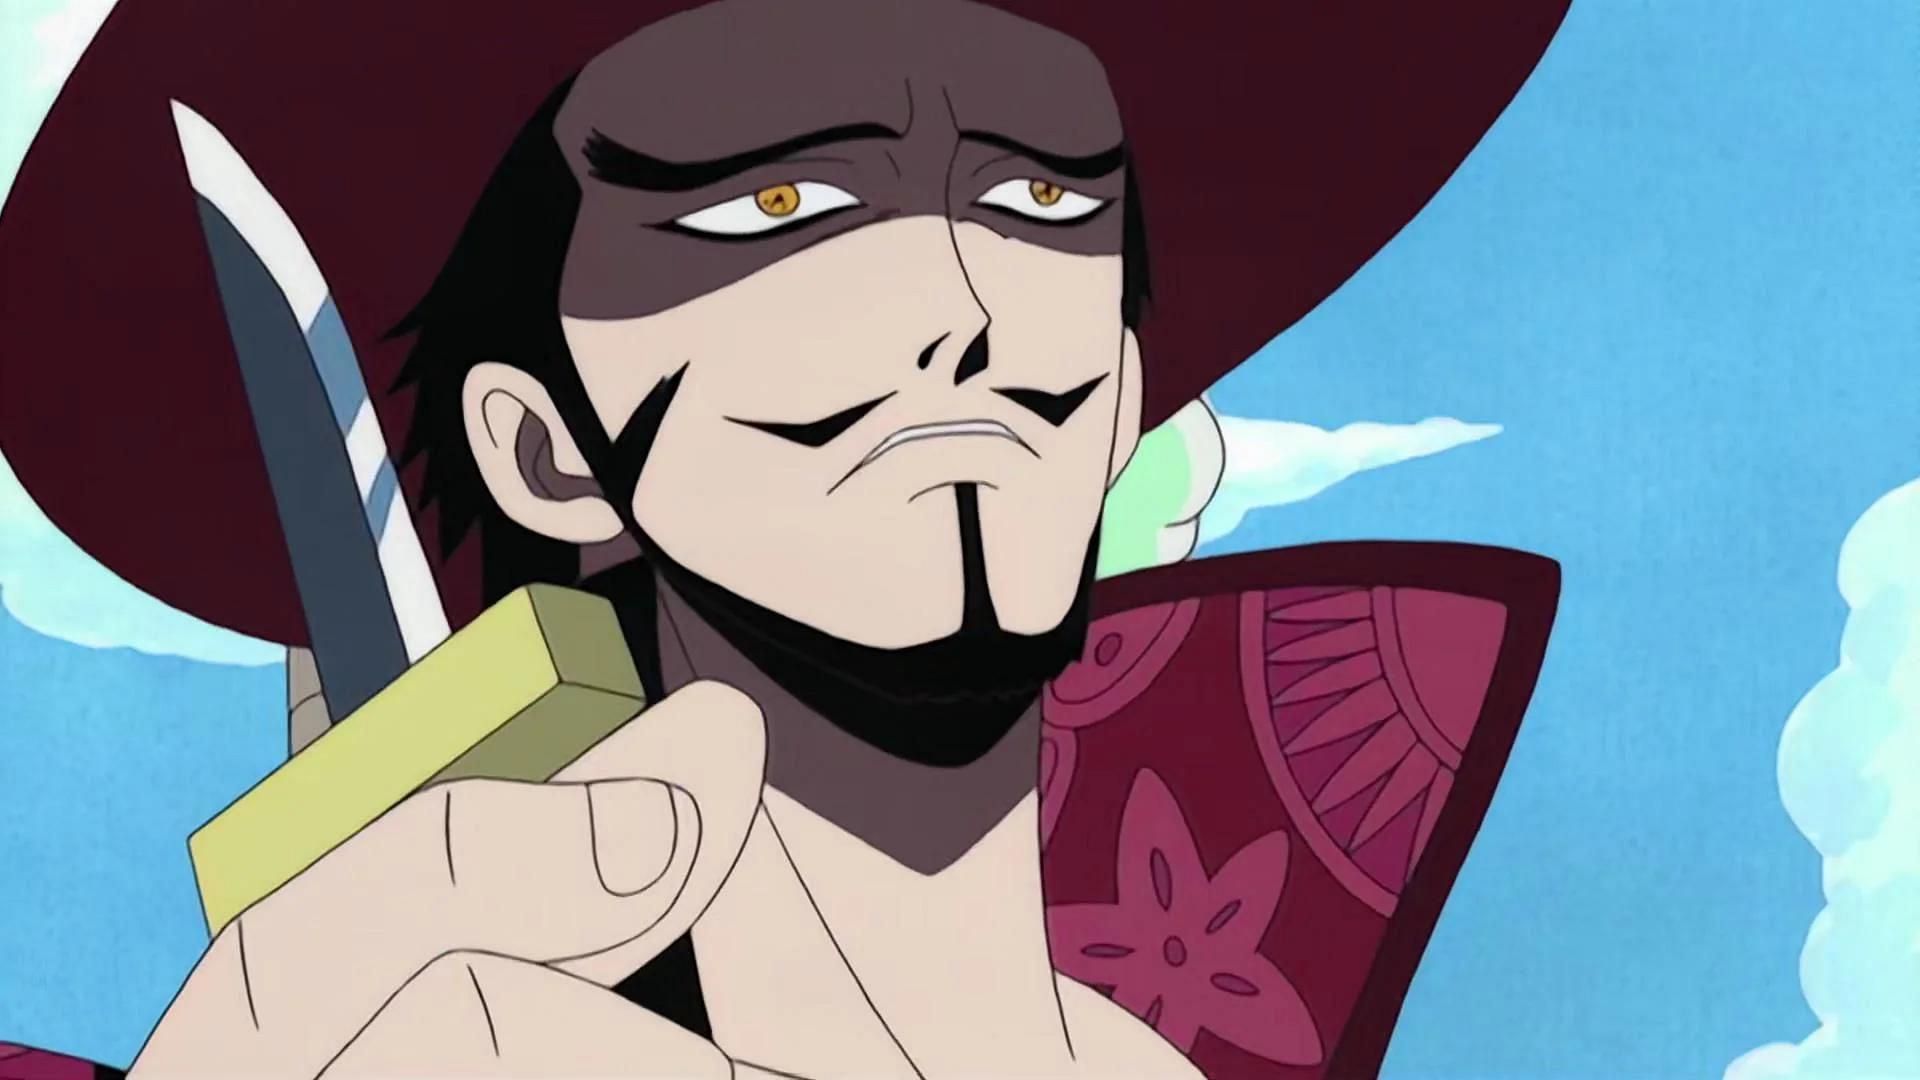 Dracule Mihawk as shown in the series (Image via Toei Animation)